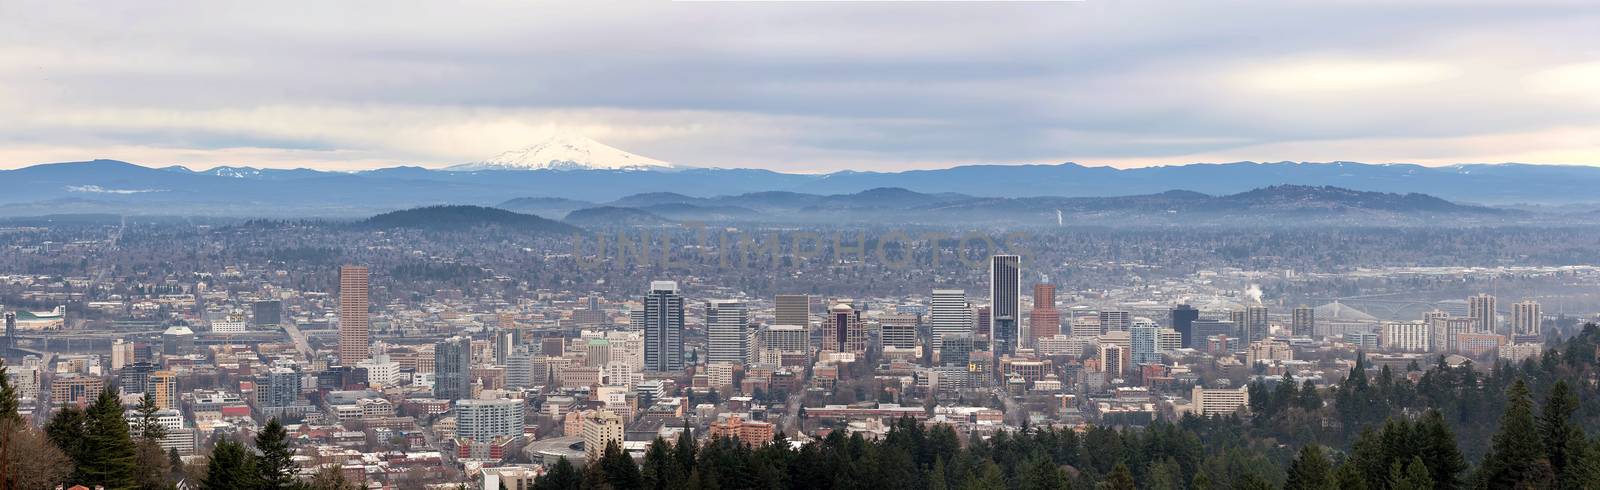 Portland Oregon Cityscape Panorama by Davidgn